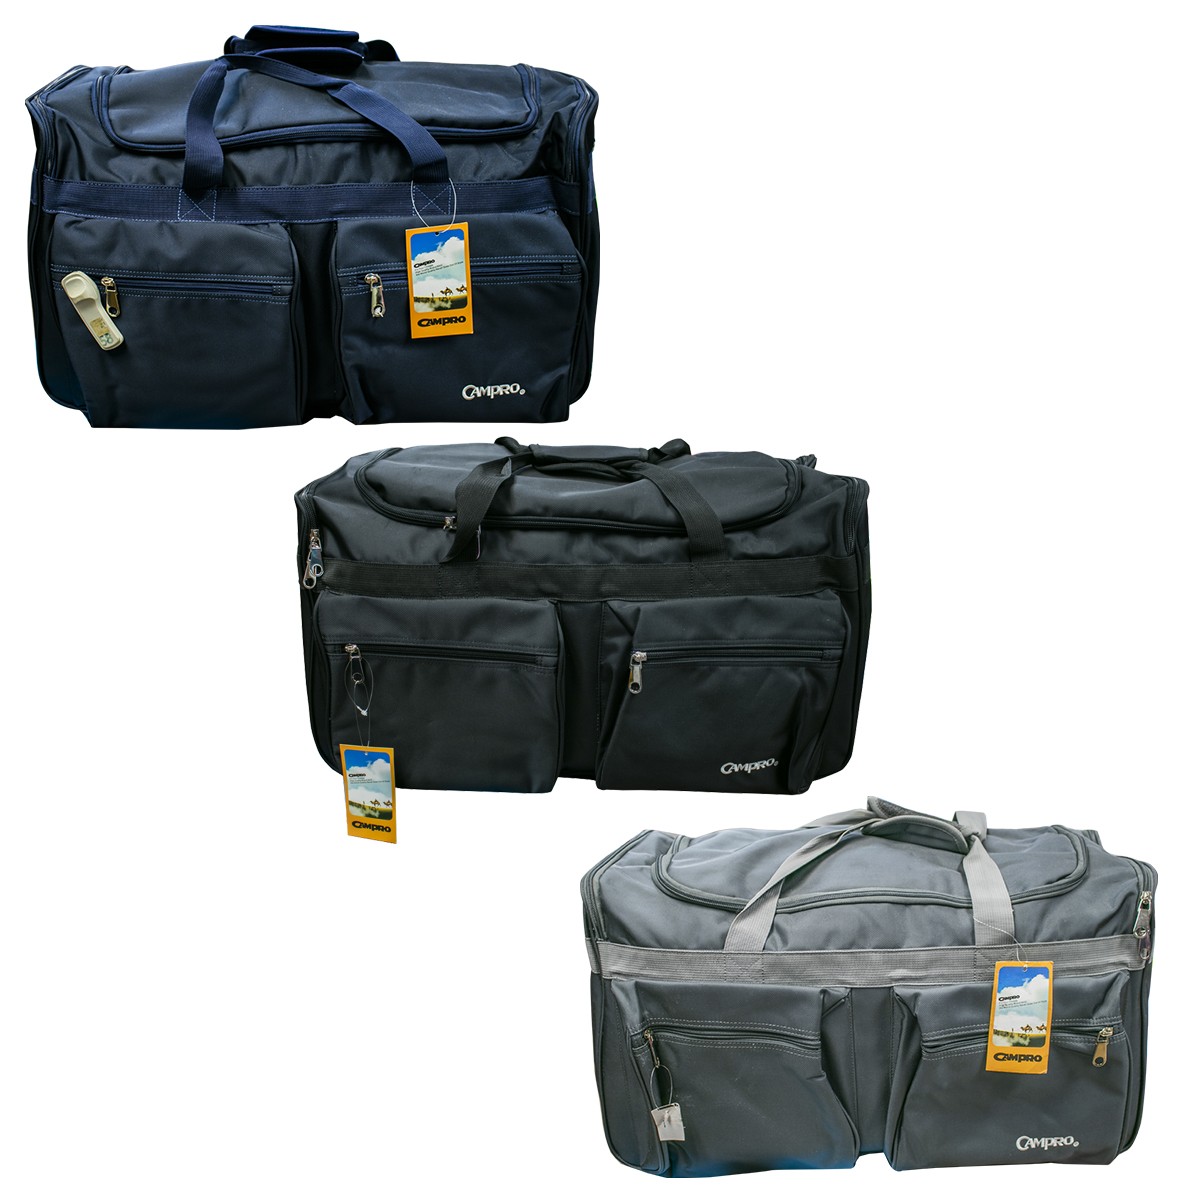 CamPro C-21624 Travel Bag 24in